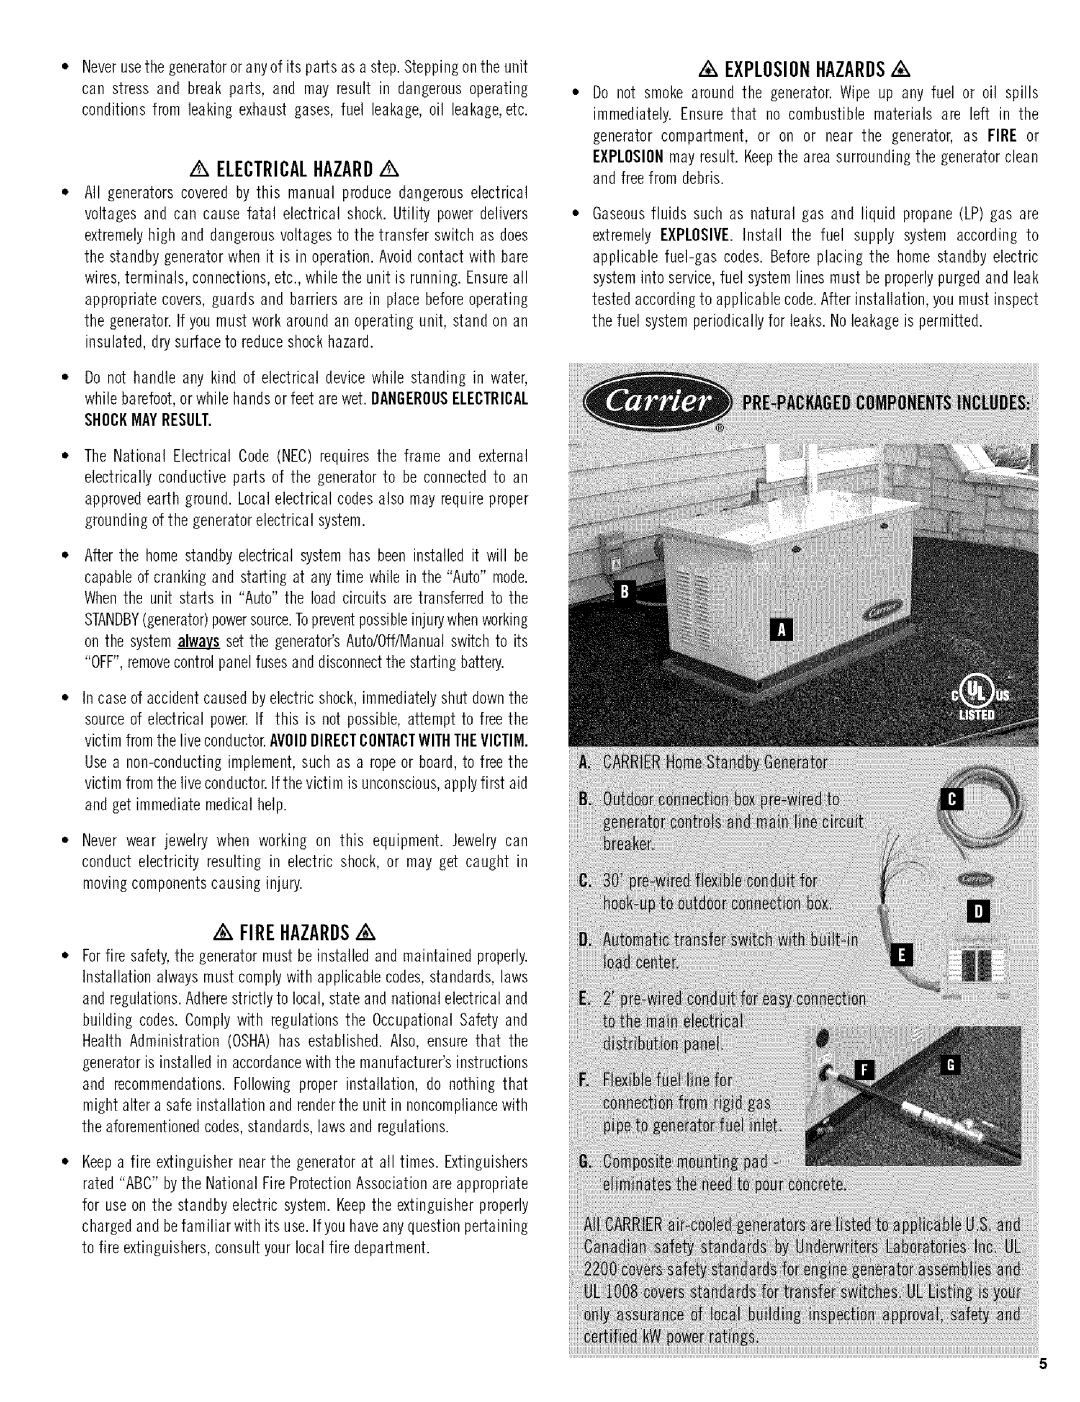 Carrier ASPB07-1SI owner manual Electricalhazard, Afirehazards, Explosionhazards, Shockmayresult 